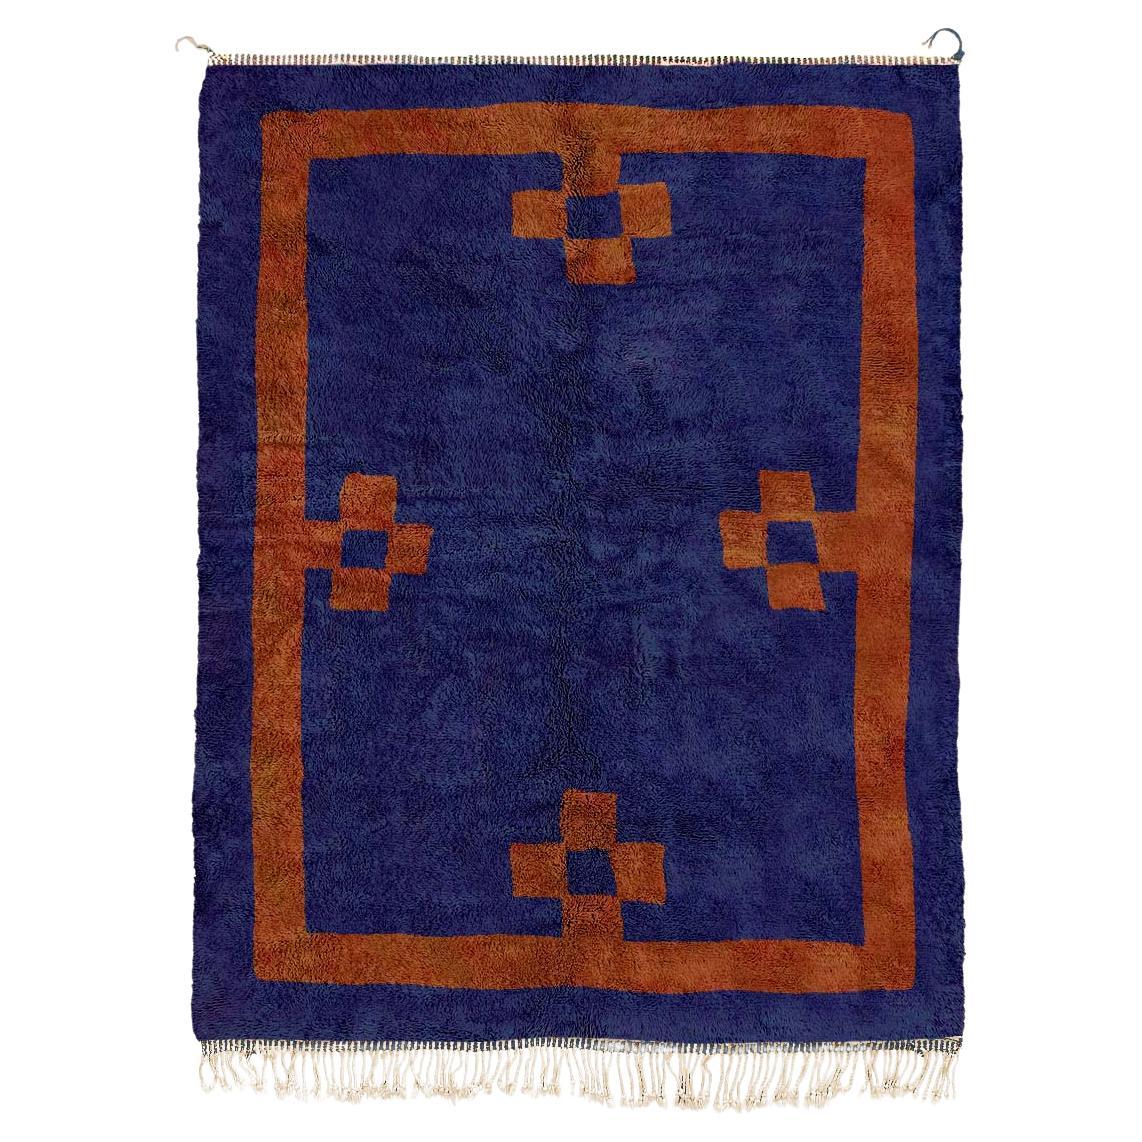 Moroccan Beni Mrirt rug 9’x12’, Deep Blue Color Red Crosses Pattern, Custom-Made